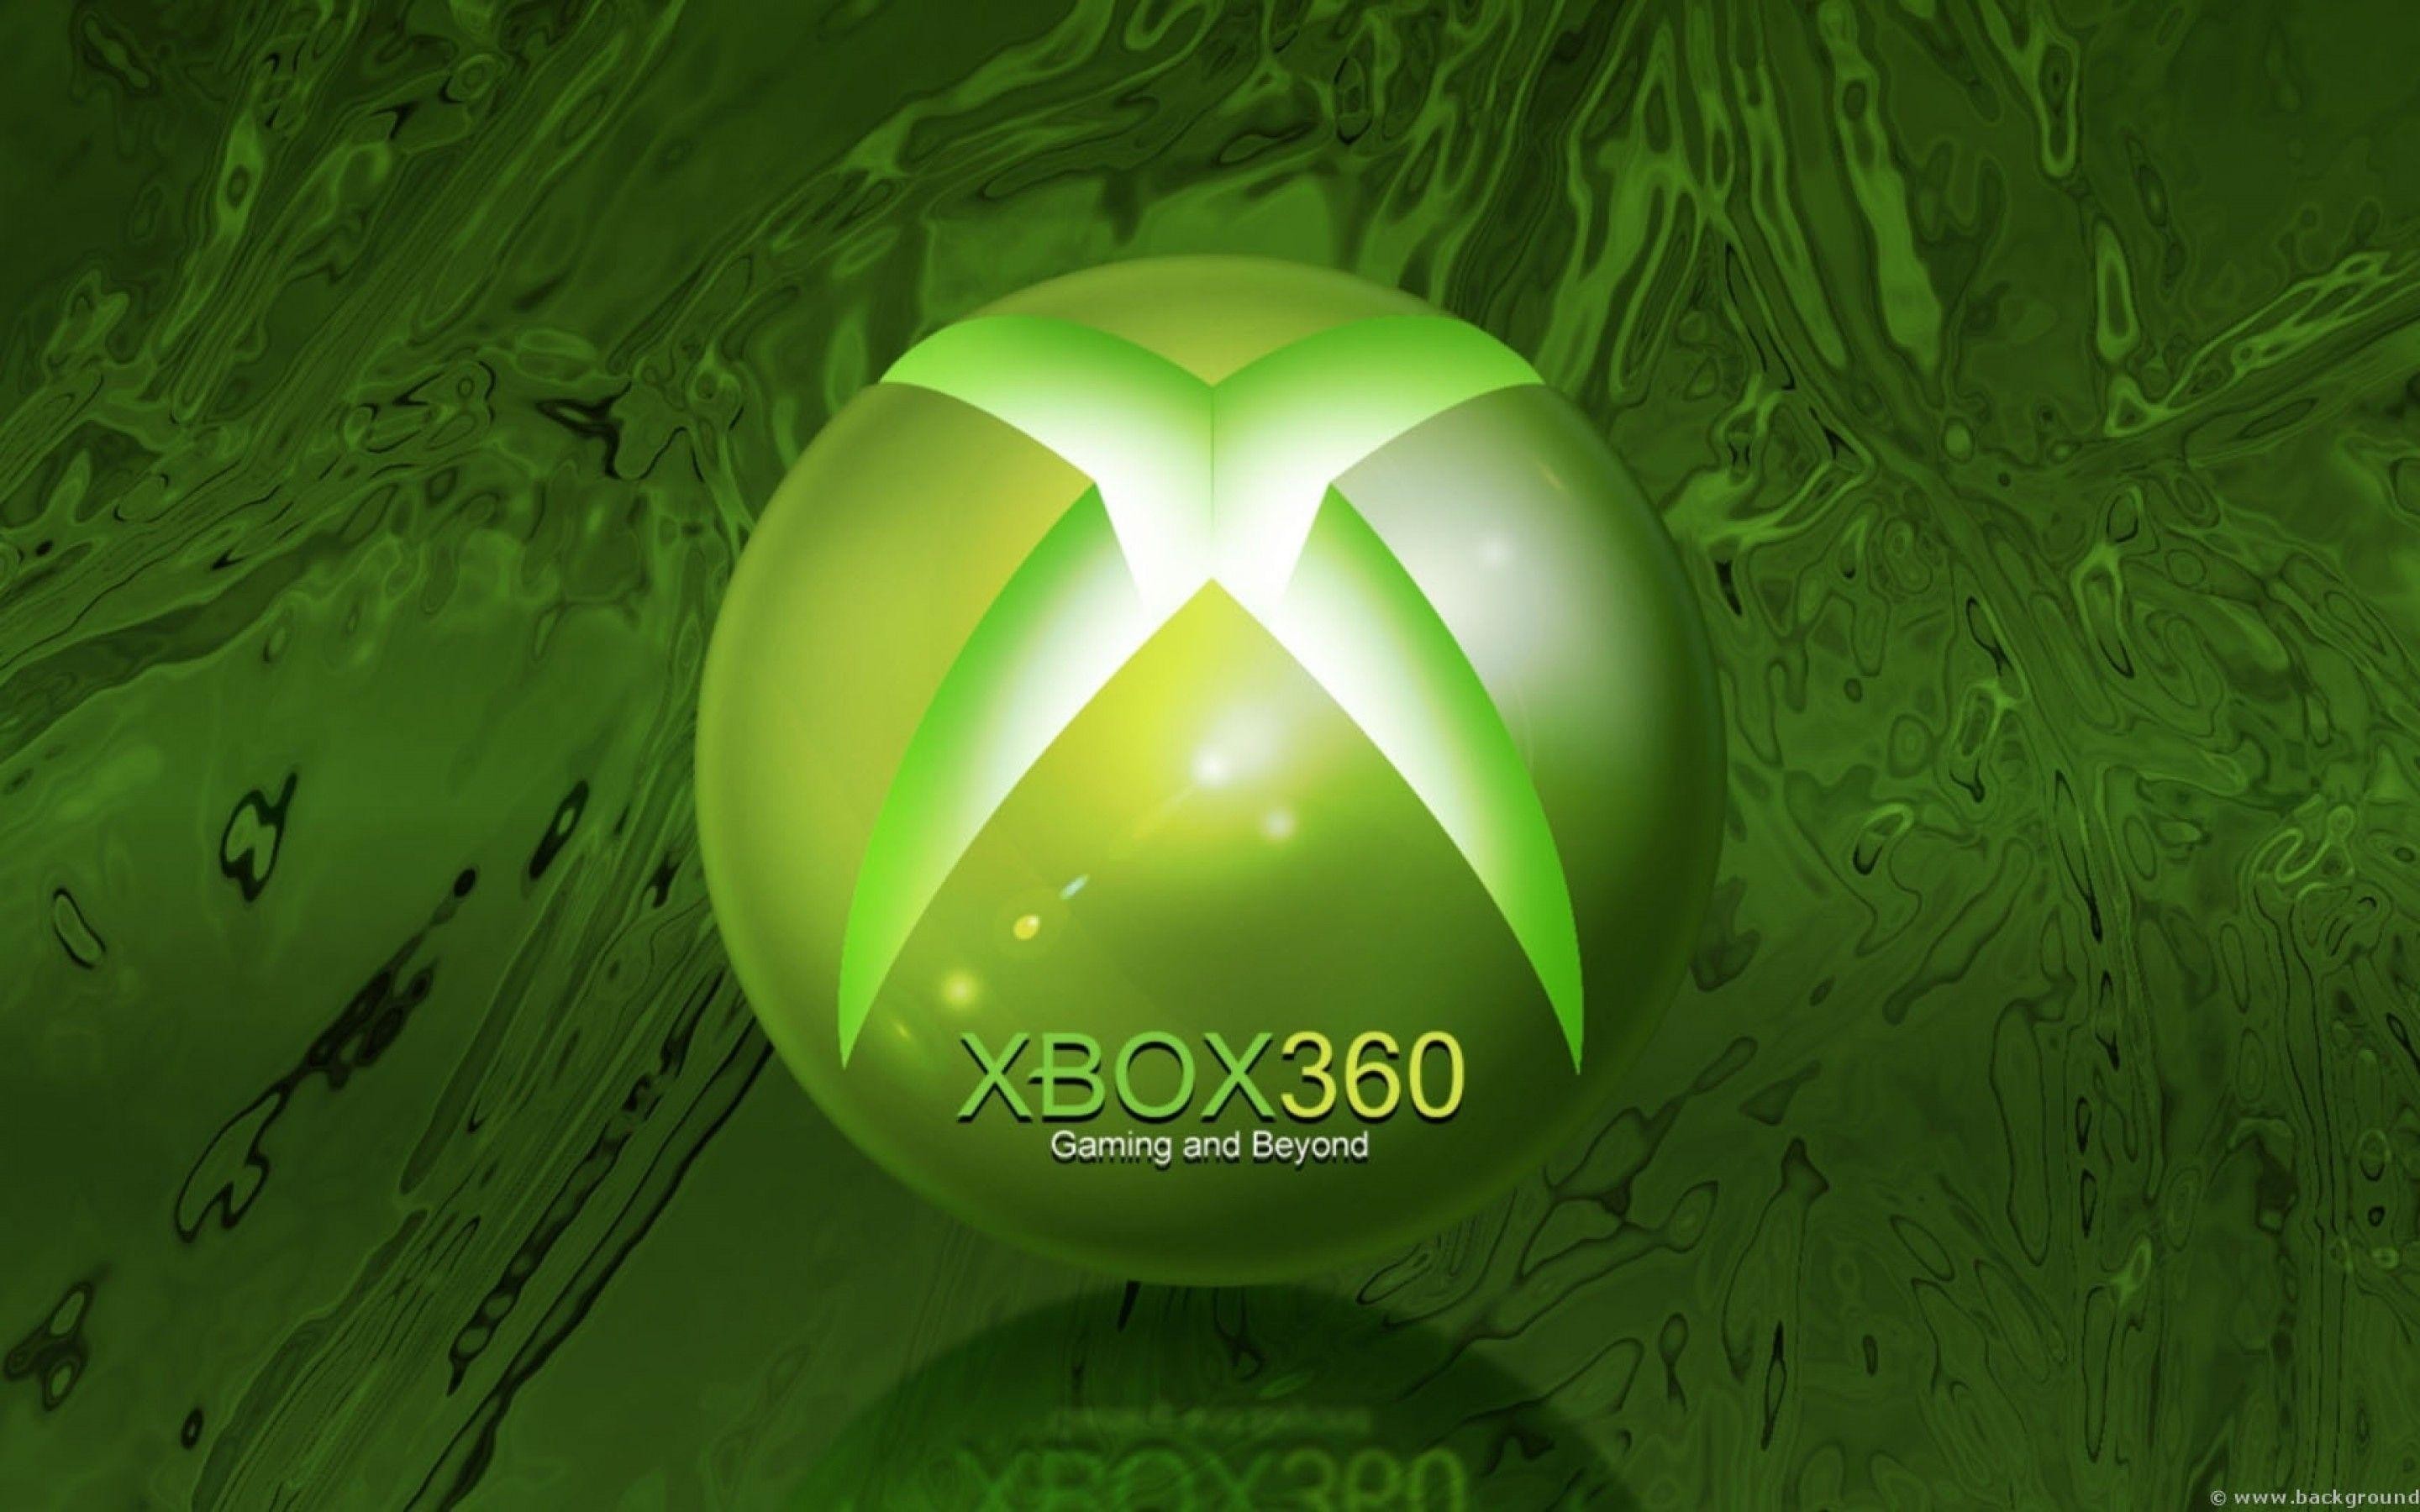 2880x1800 Xbox 360 Wallpapers - Full HD wallpaper search